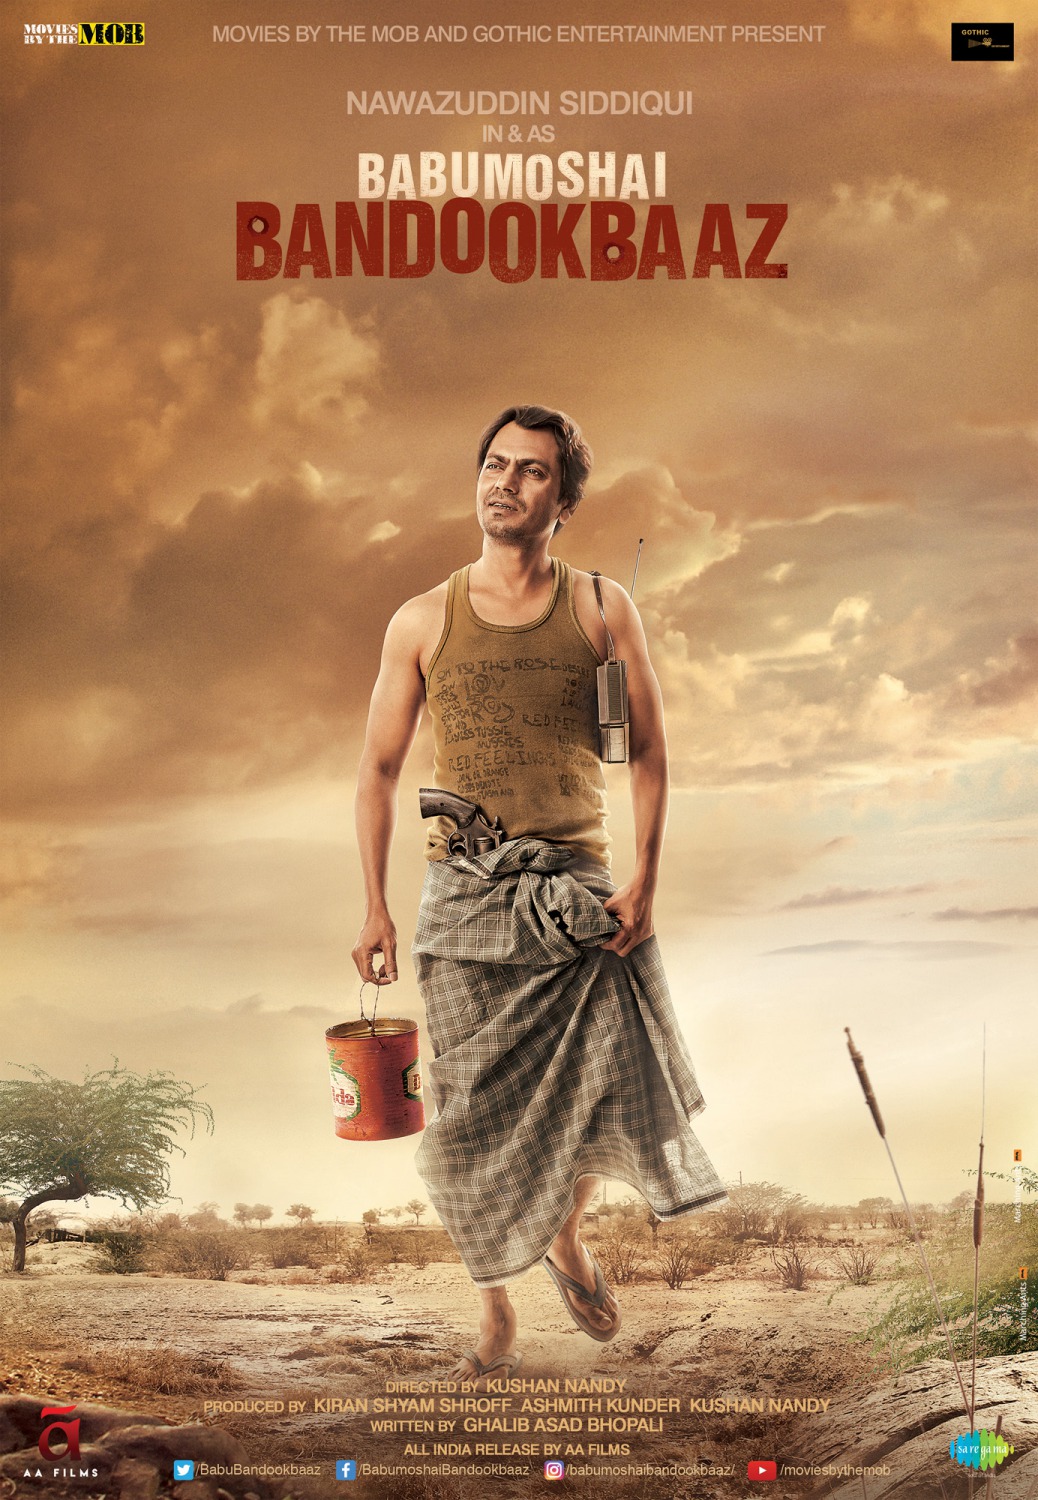 Babumoshai Bandookbaaz marathi movie download utorrent free